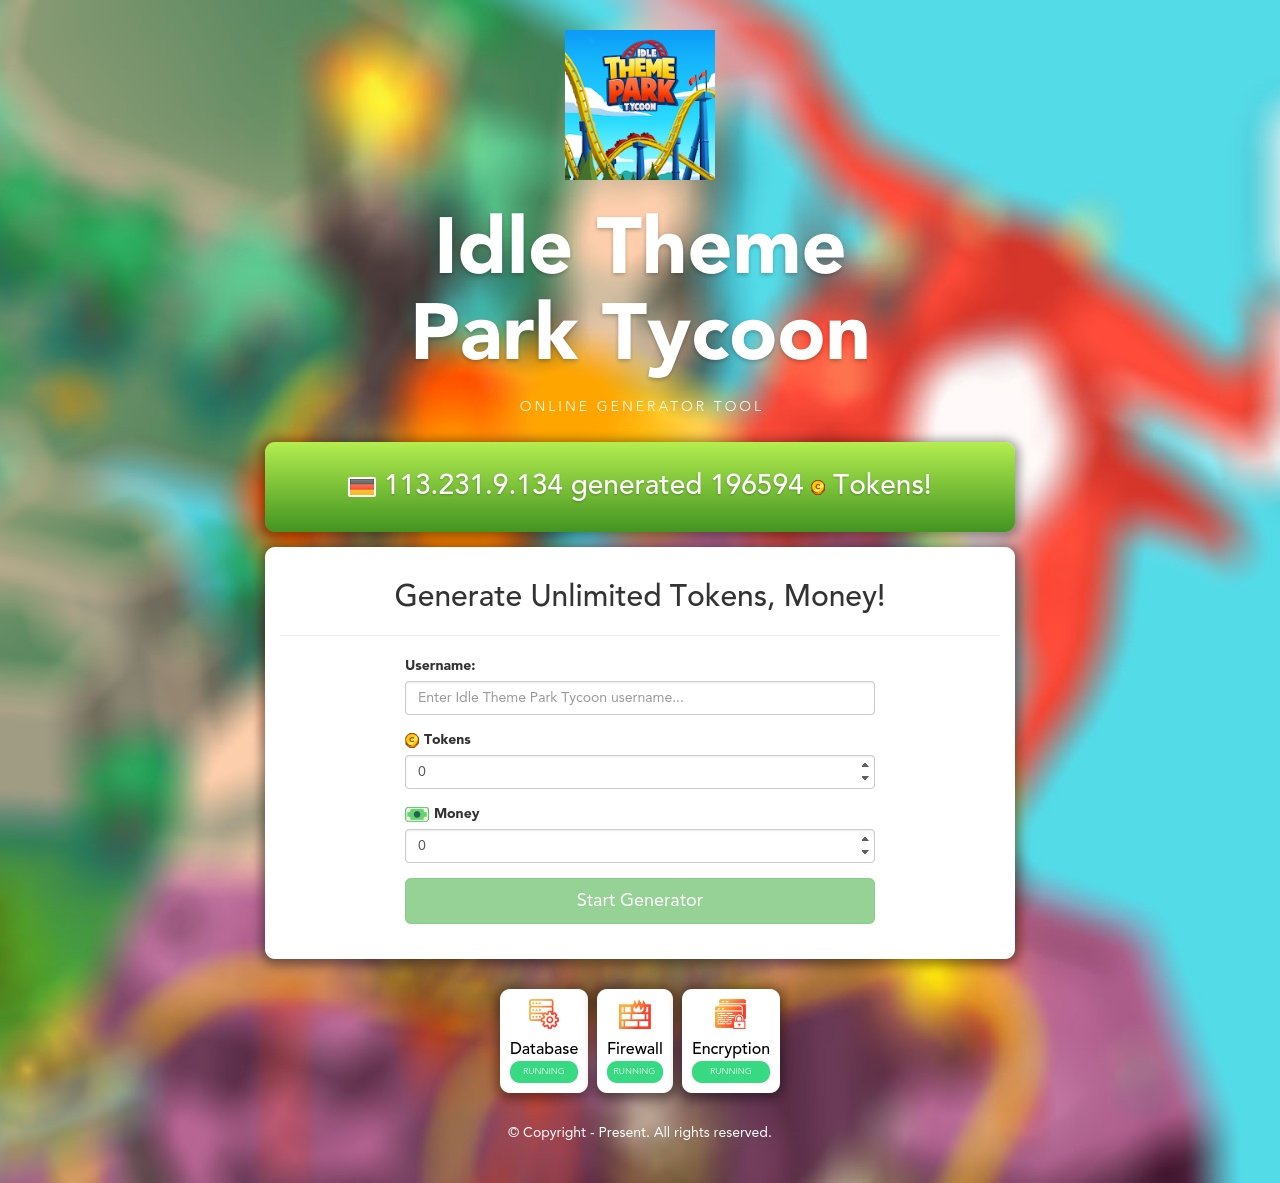 Idle Theme Park Tycoon Hacked Apk Money Glitch On Idle Theme